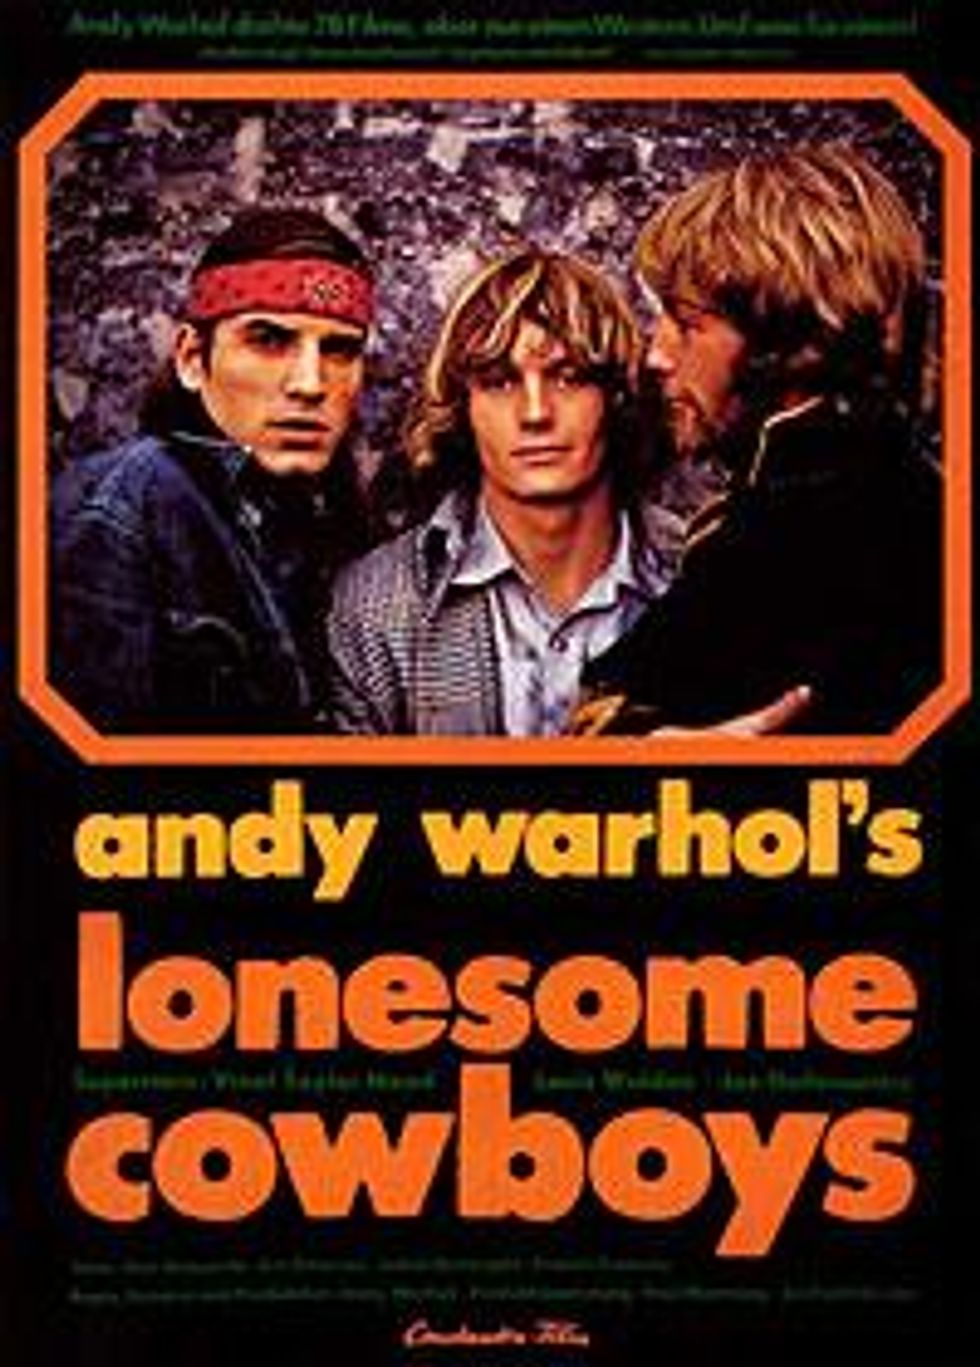 Lonesome-cowboys-movie-posterx200_0